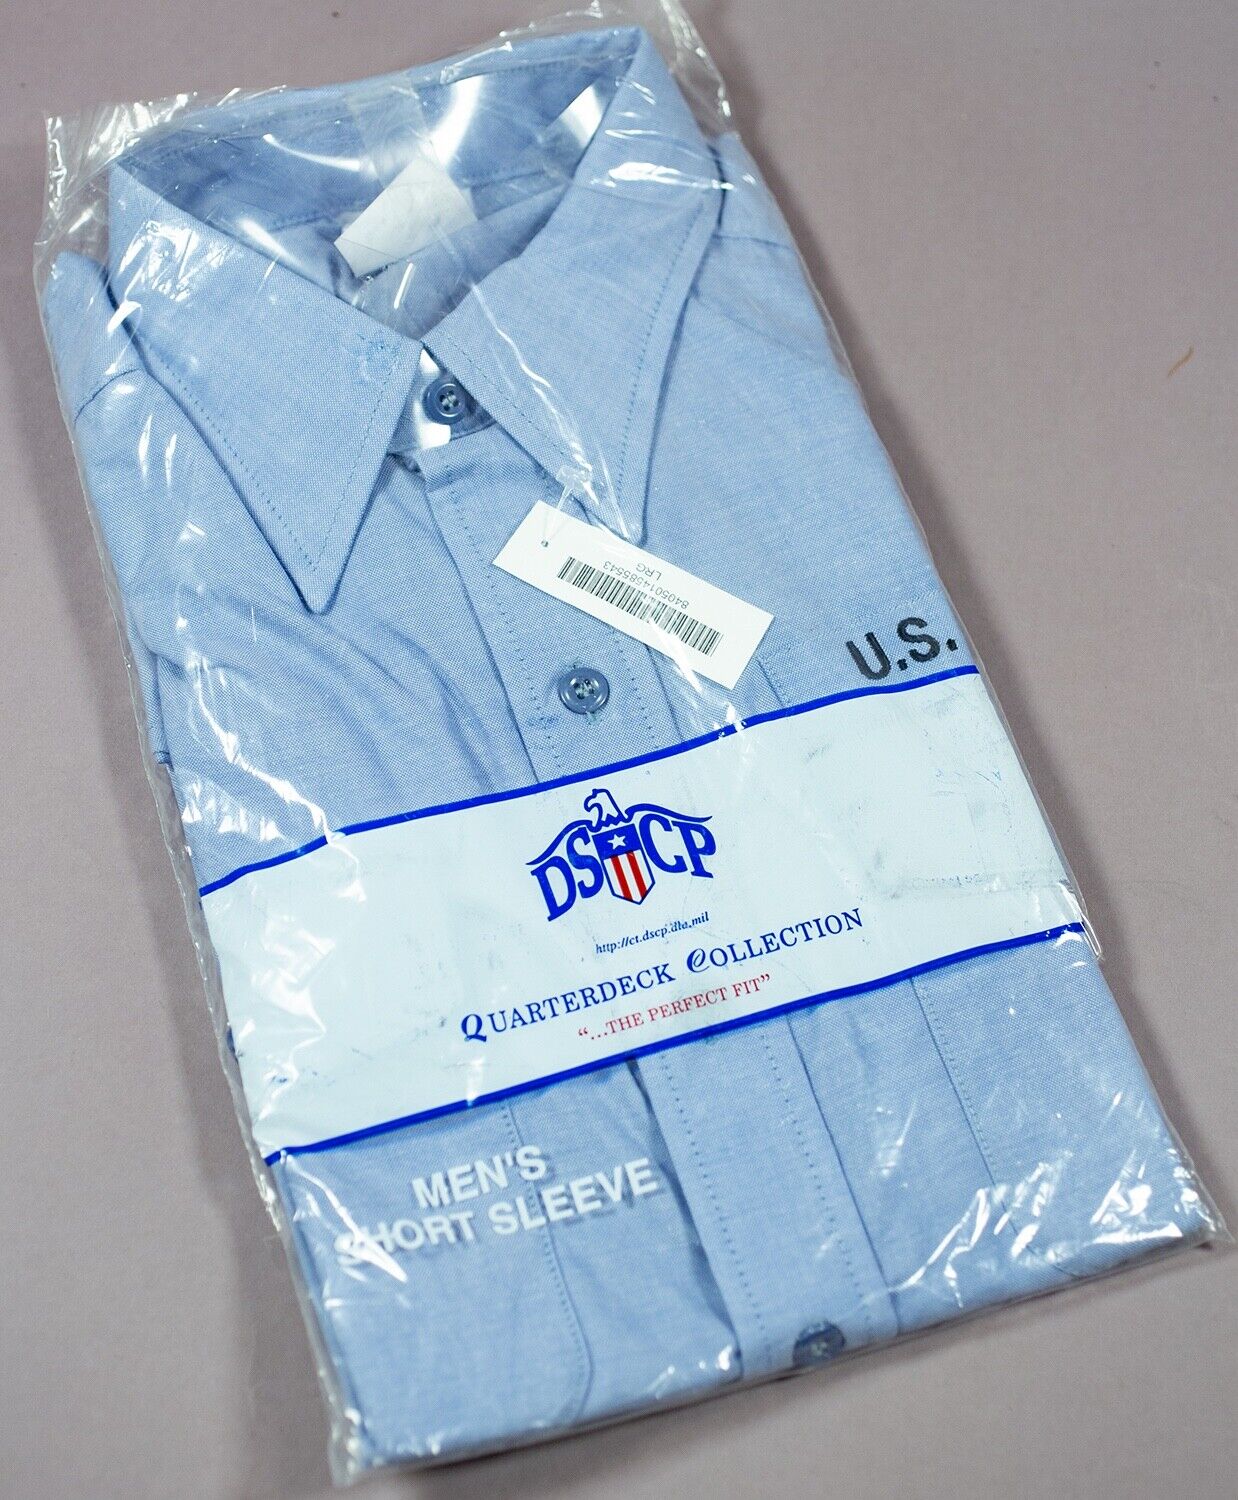 DSCP US Navy Quarterdeck Collection Men's Short Sleeve Shirt - Blue  Large - New